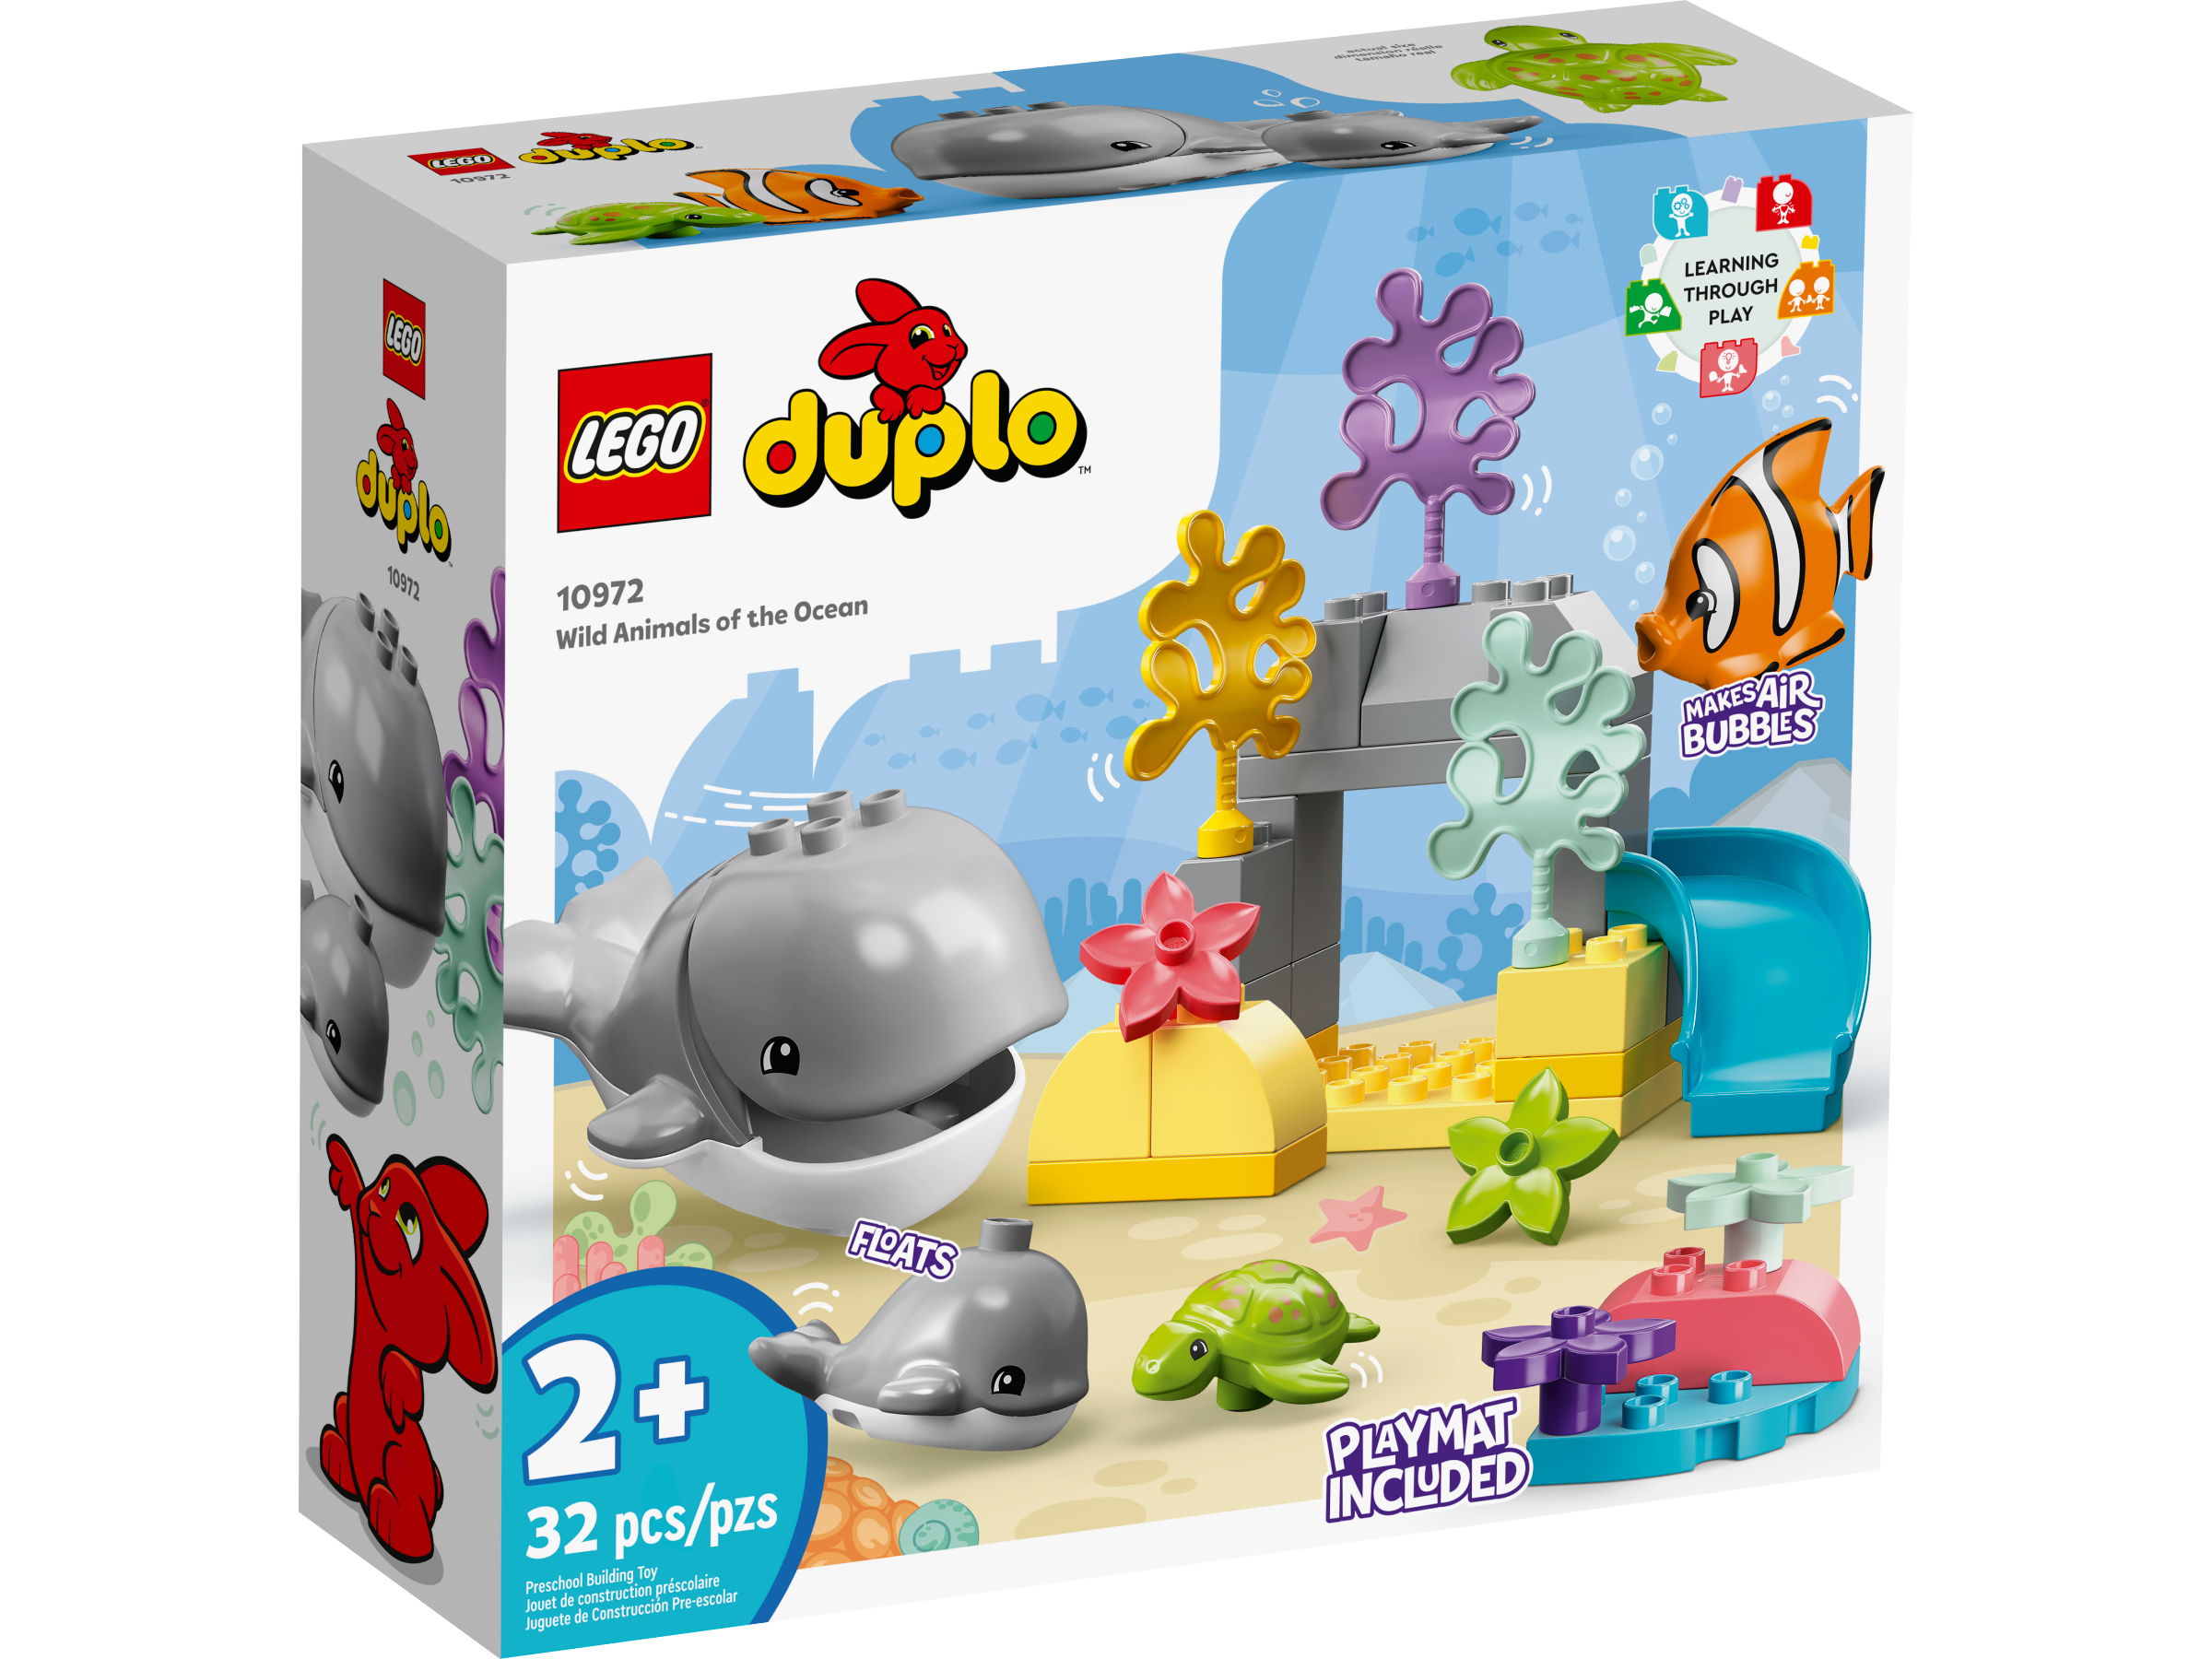 Buy 10975 LEGO® DUPLO® Wild animals of the world